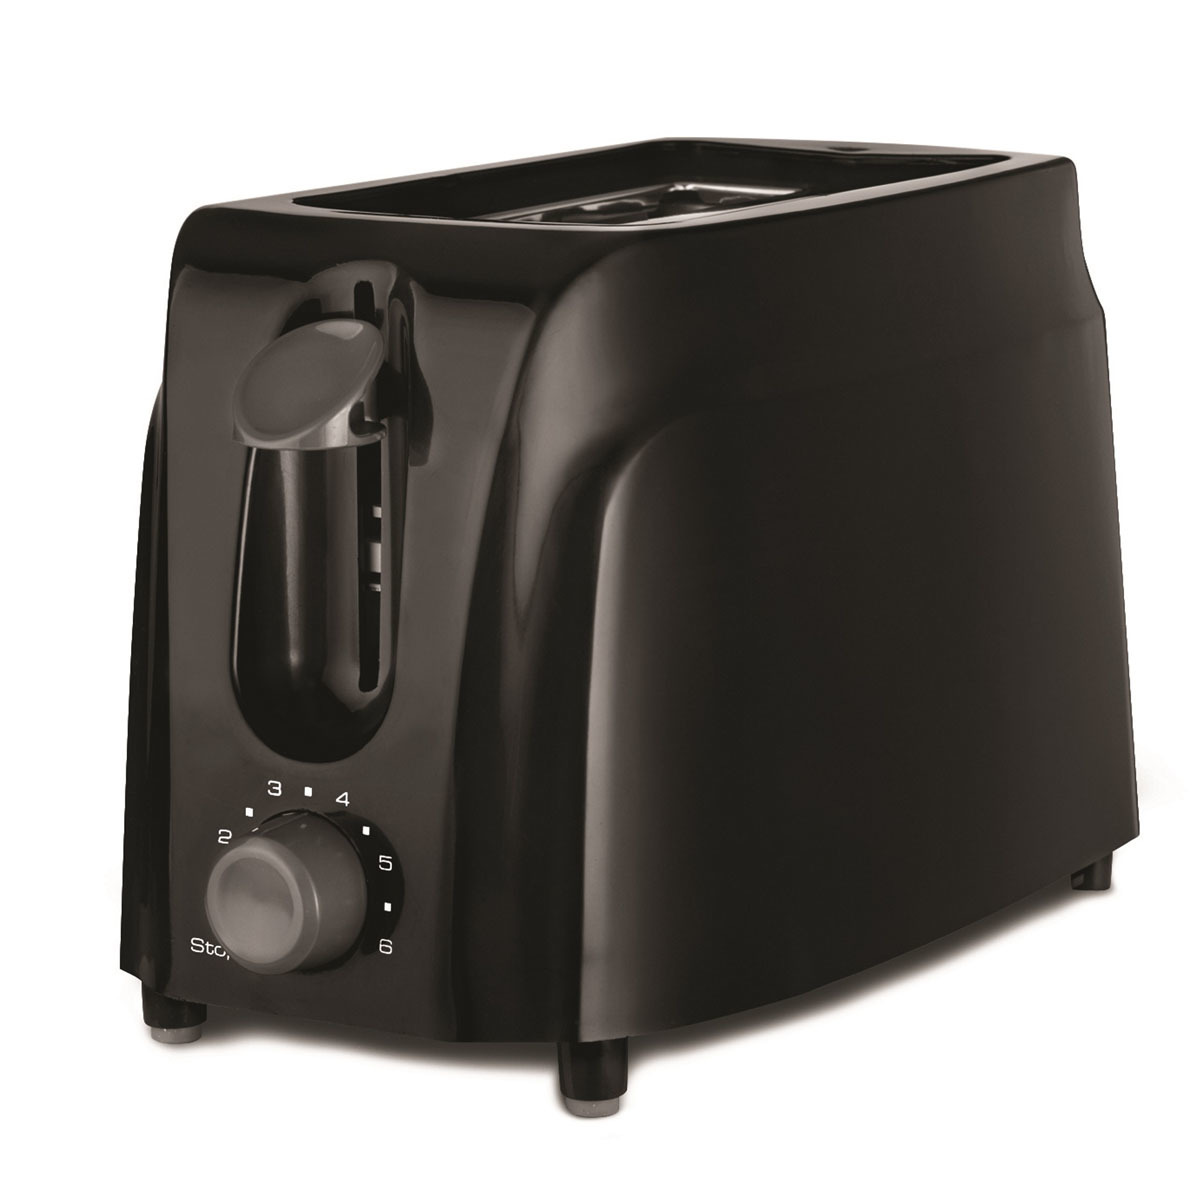 Wholesale Toasters - 2 Slices, 6 Settings